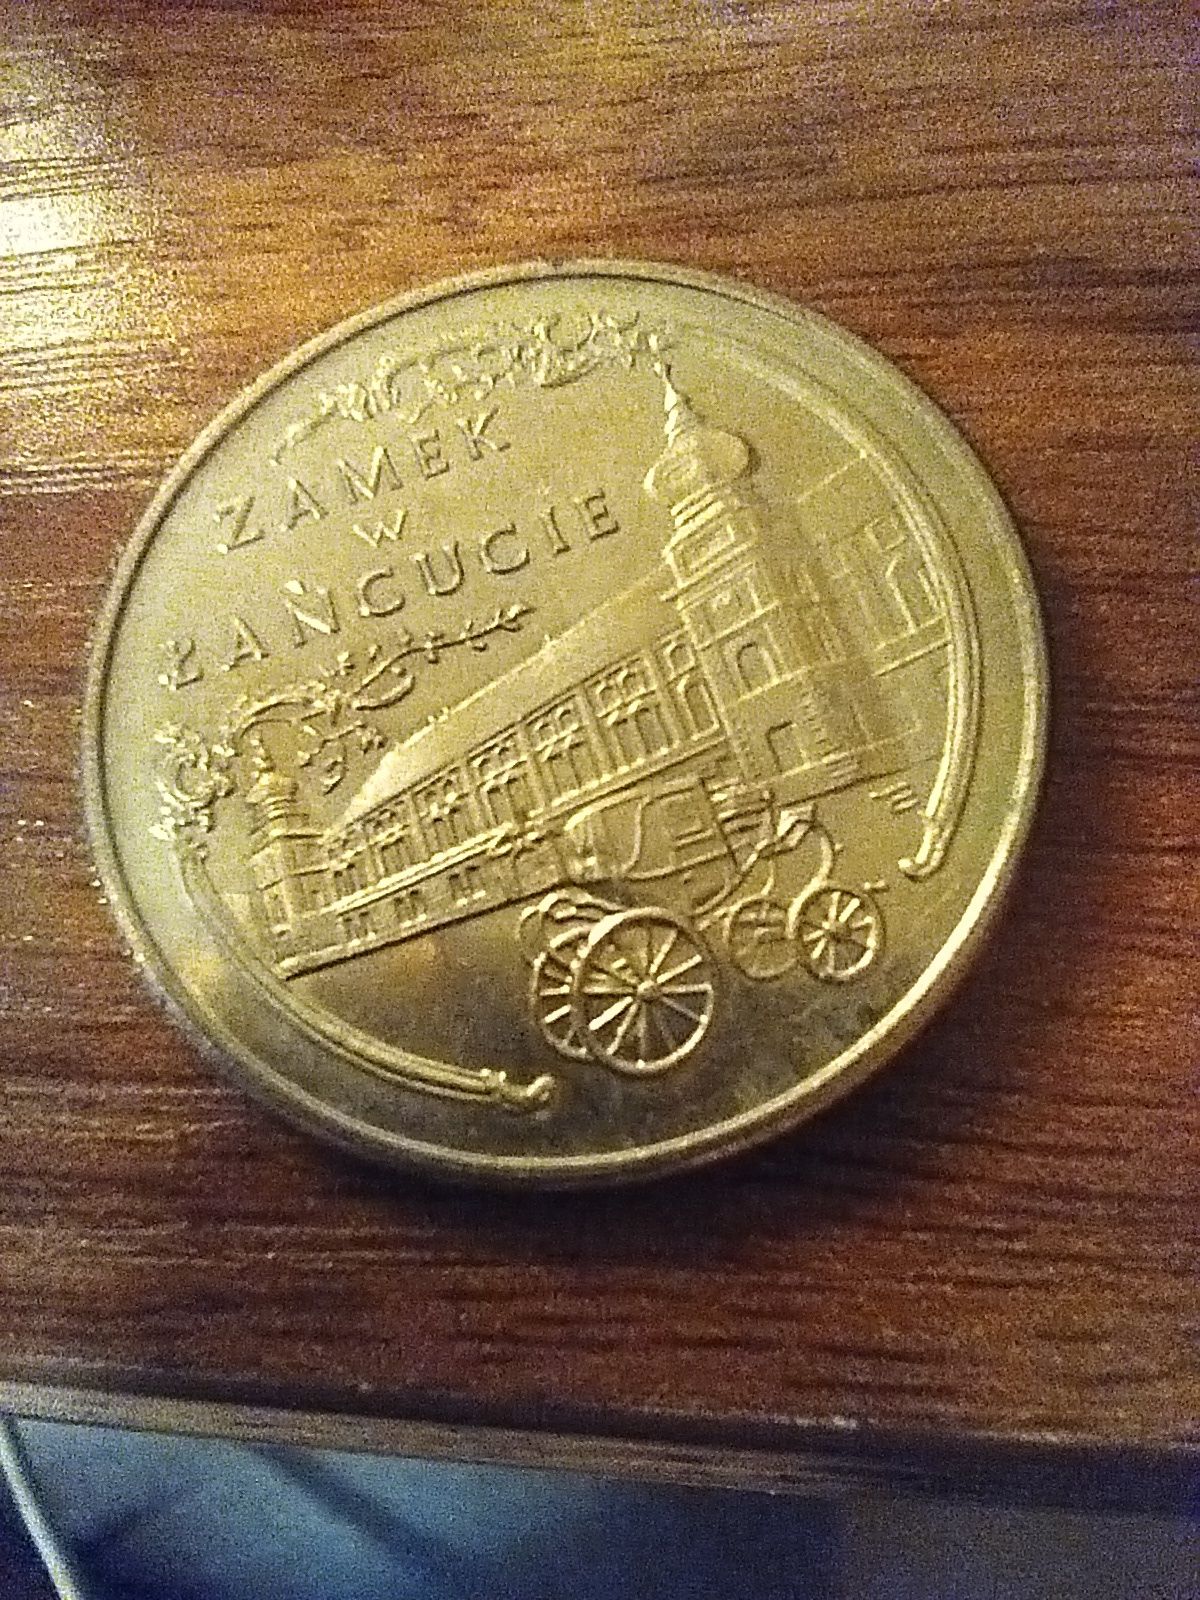 Moneta 20000 zł z 1993 roku